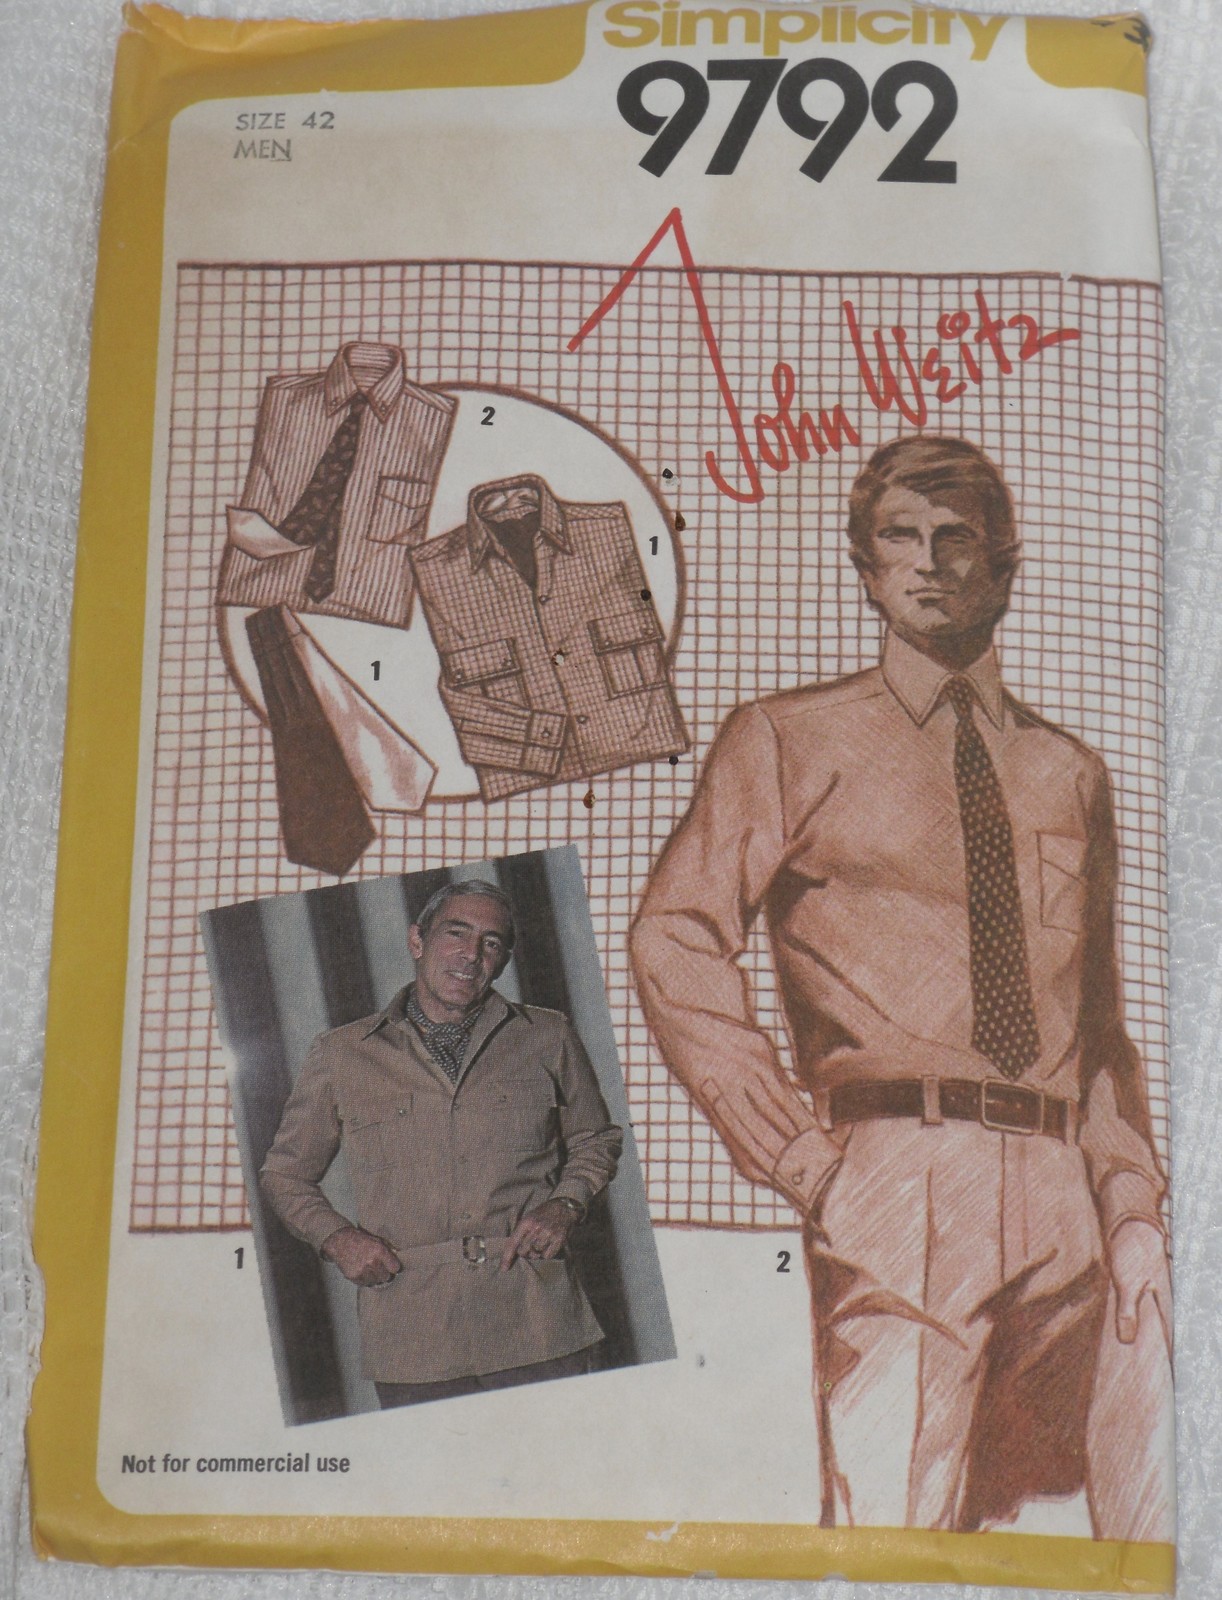 Simplicity Pattern 9792 Men's Shirt, Jacket with Belt, Ascot, Necktie Size 42 UC - $9.95